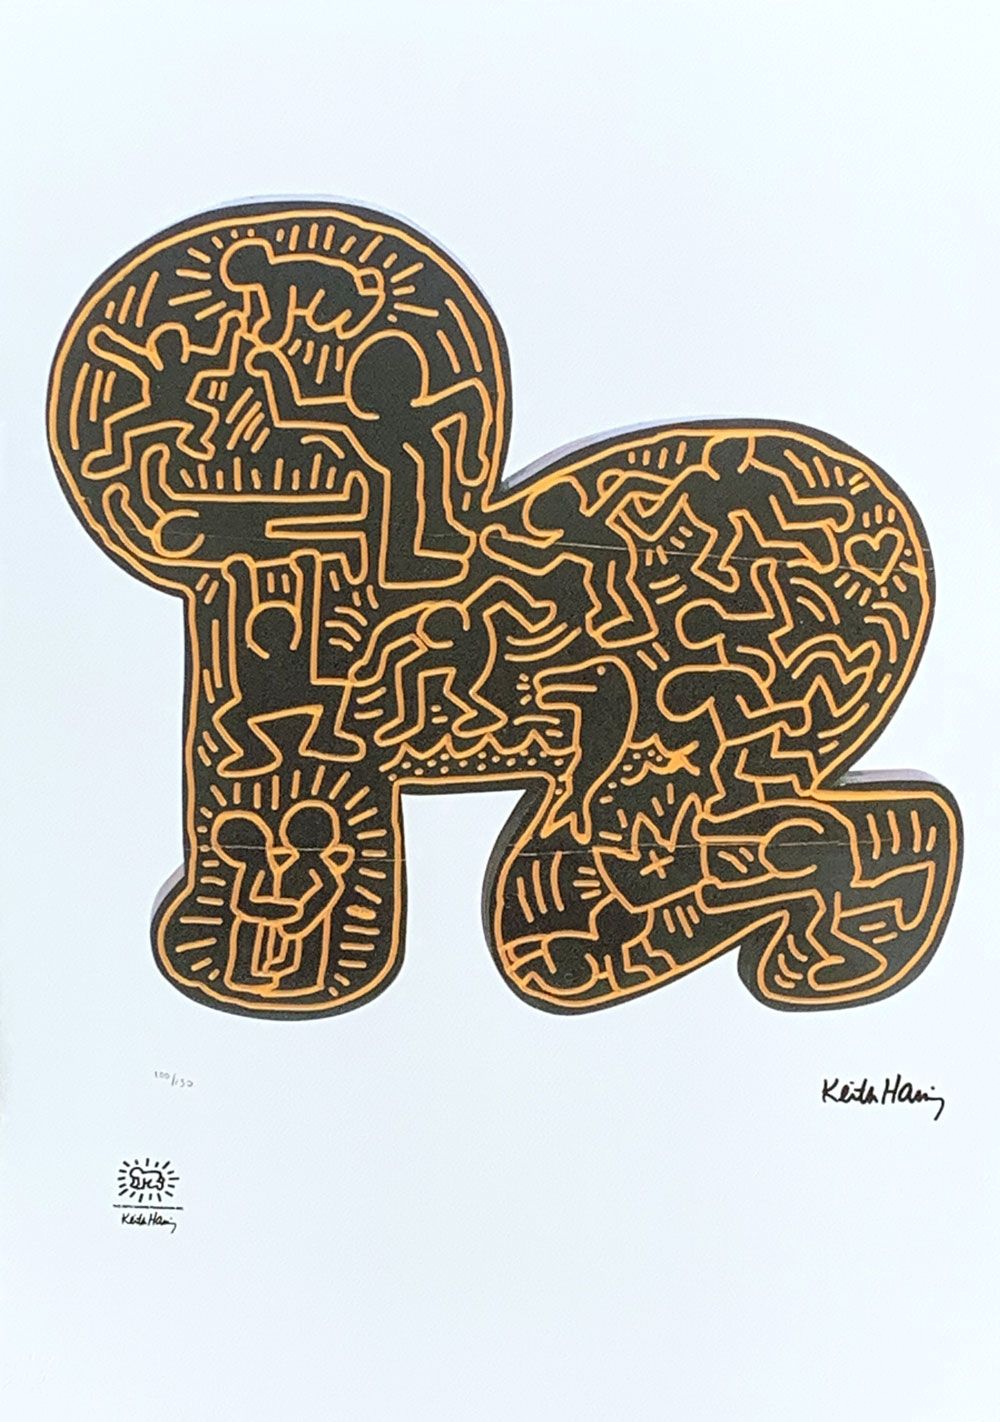 Keith Haring 凯斯-哈林（1958-1990）的《宝贝》小册子

版面上有签名，并有编号

凯斯-哈林基金会的干章

70 x 50厘米